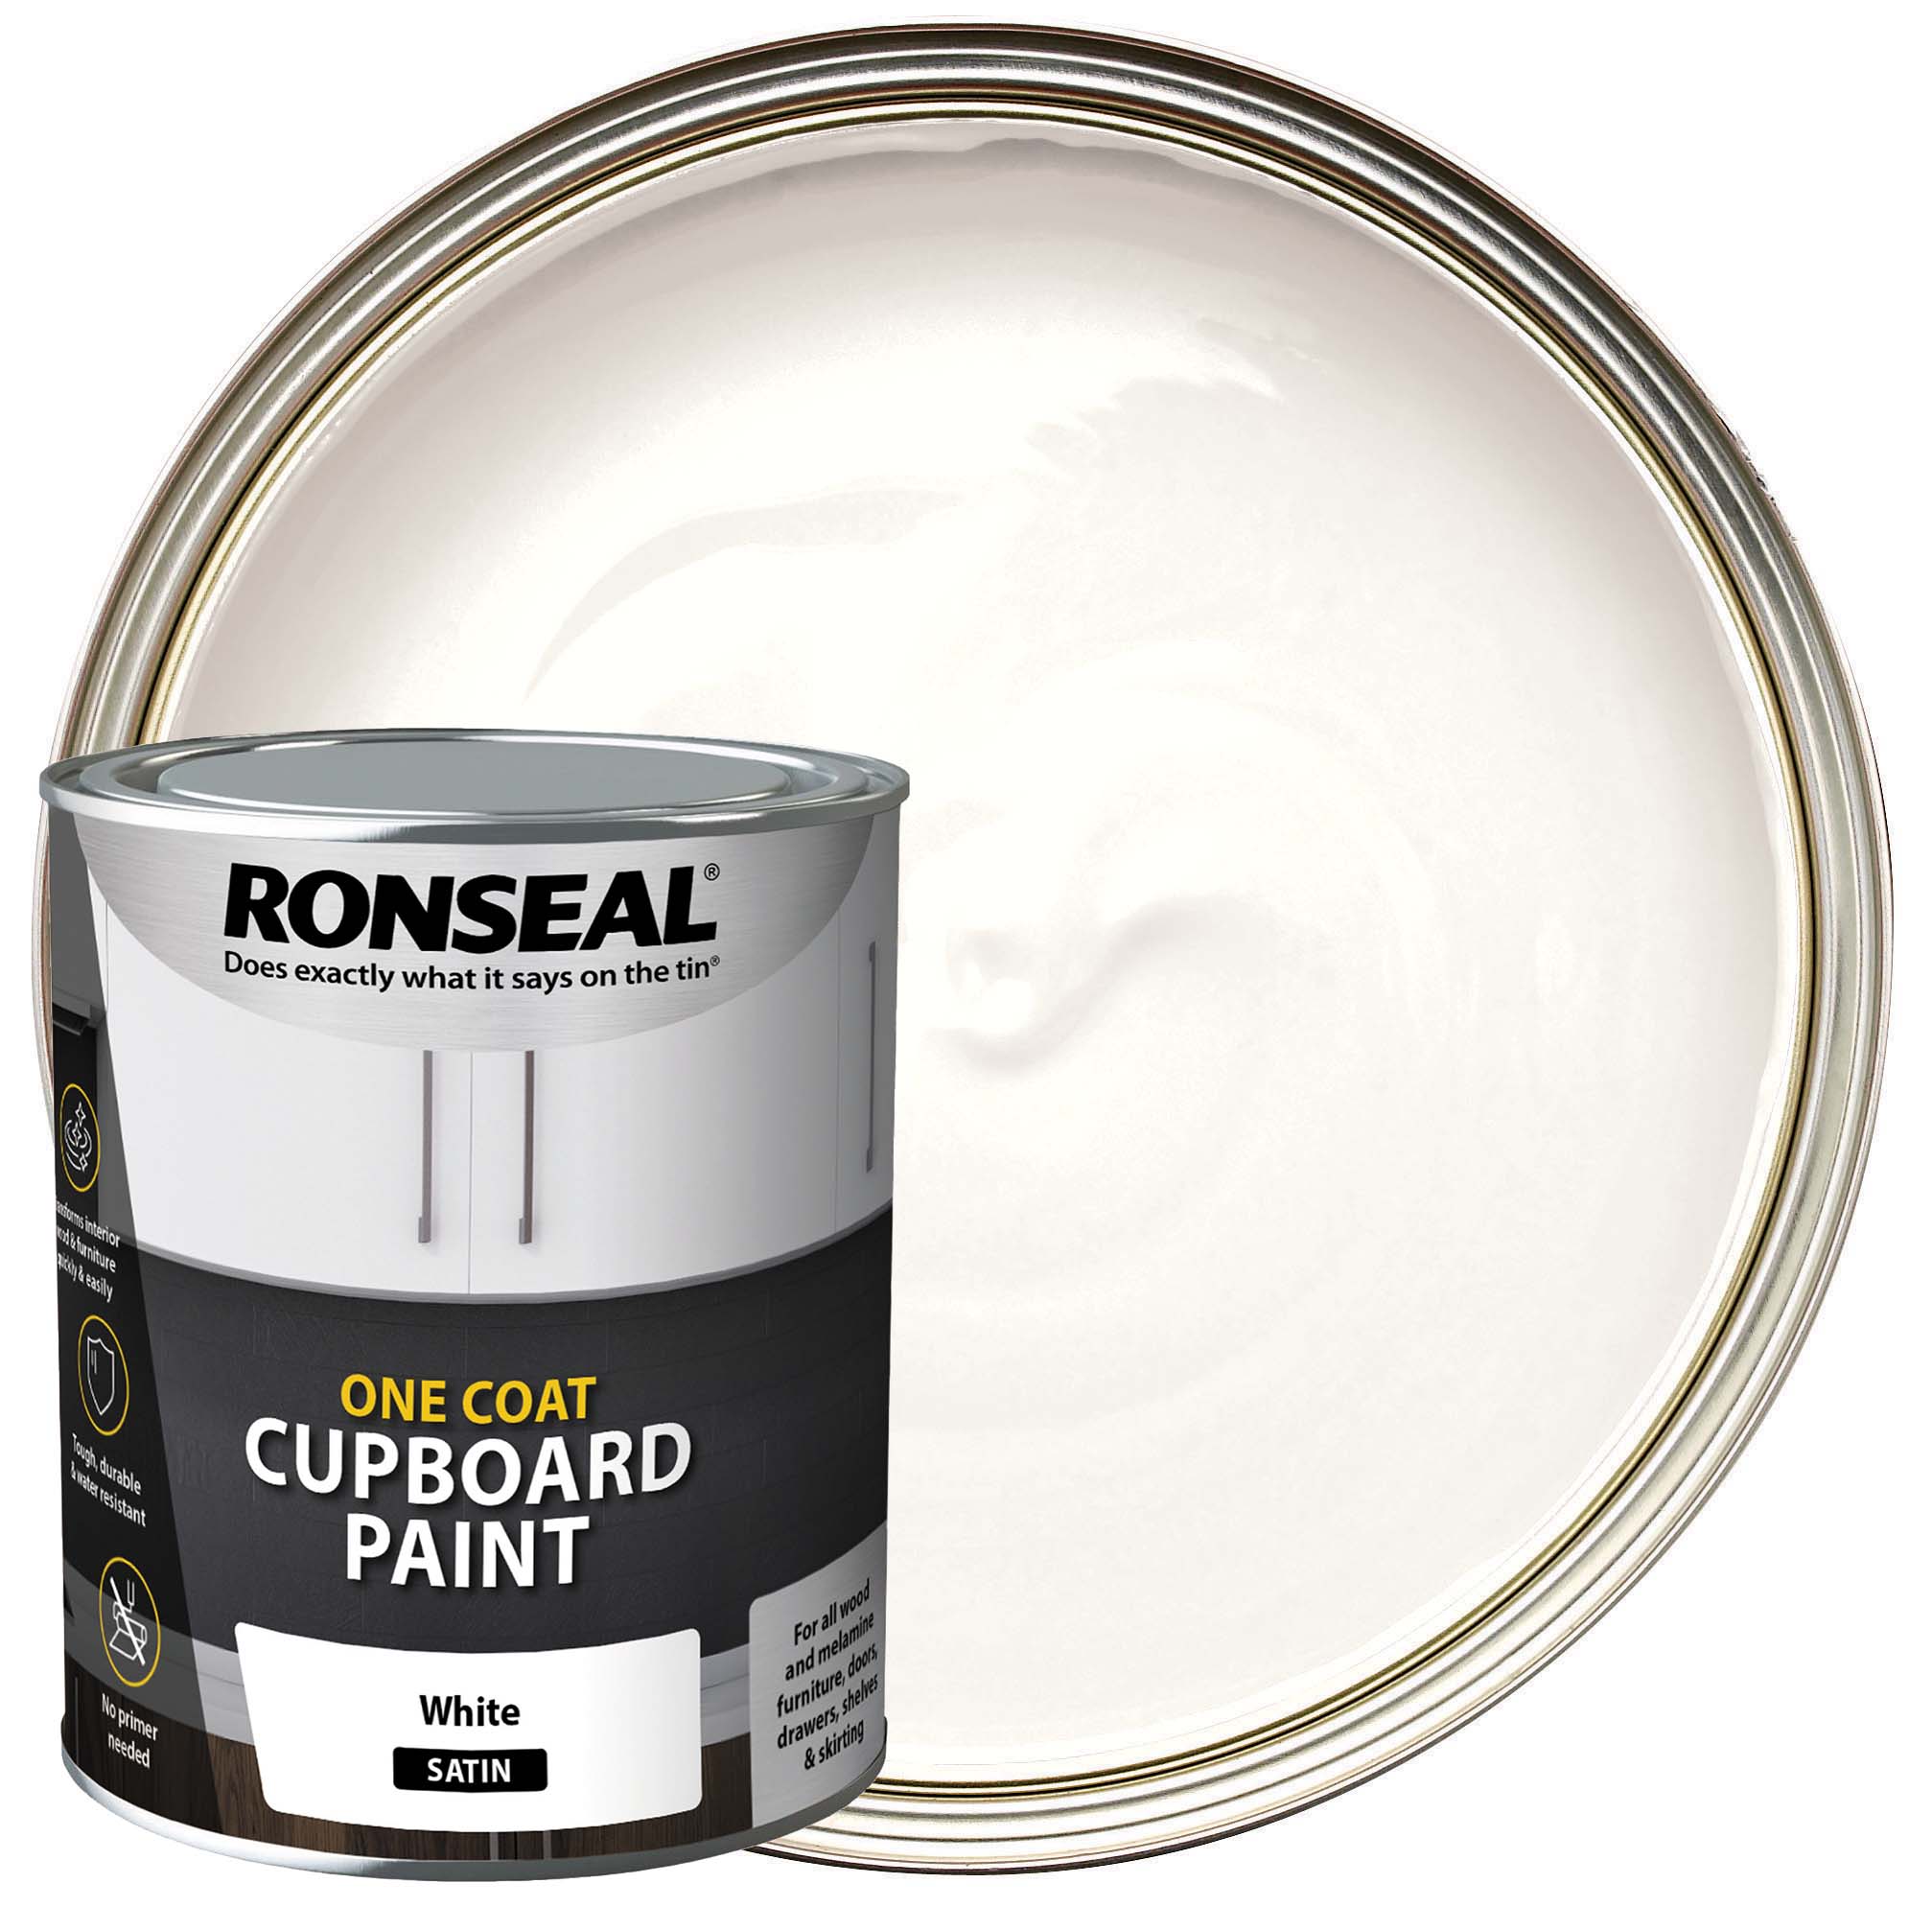 Ronseal 10 Year Weatherproof Wood Paint White Satin Exterior Wood paint,  750ml Tin